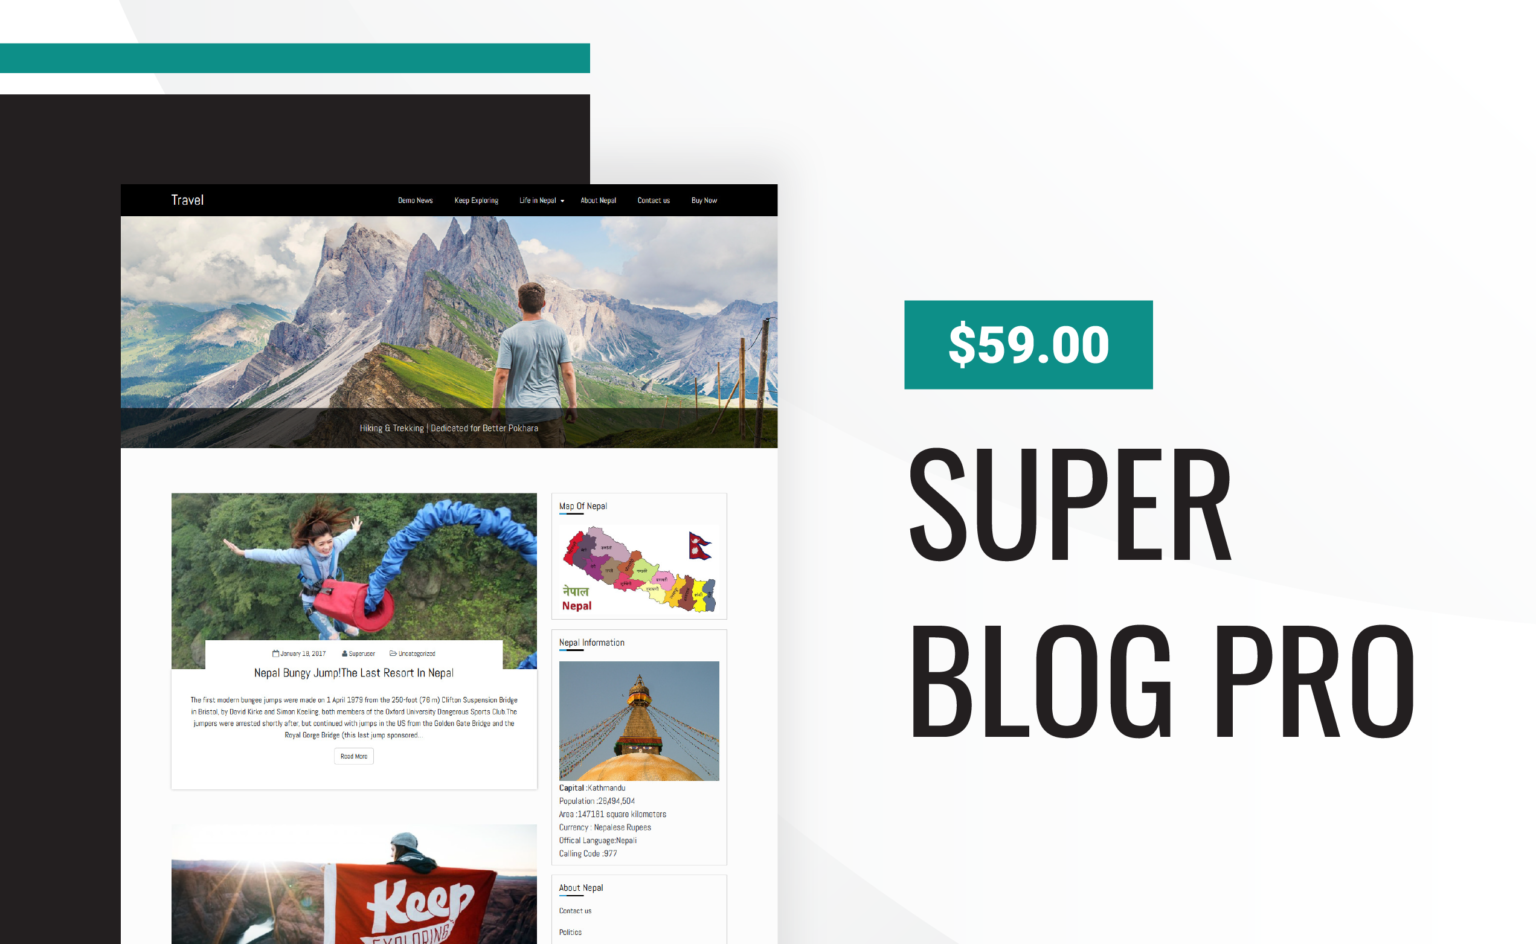 Super Blog Pro